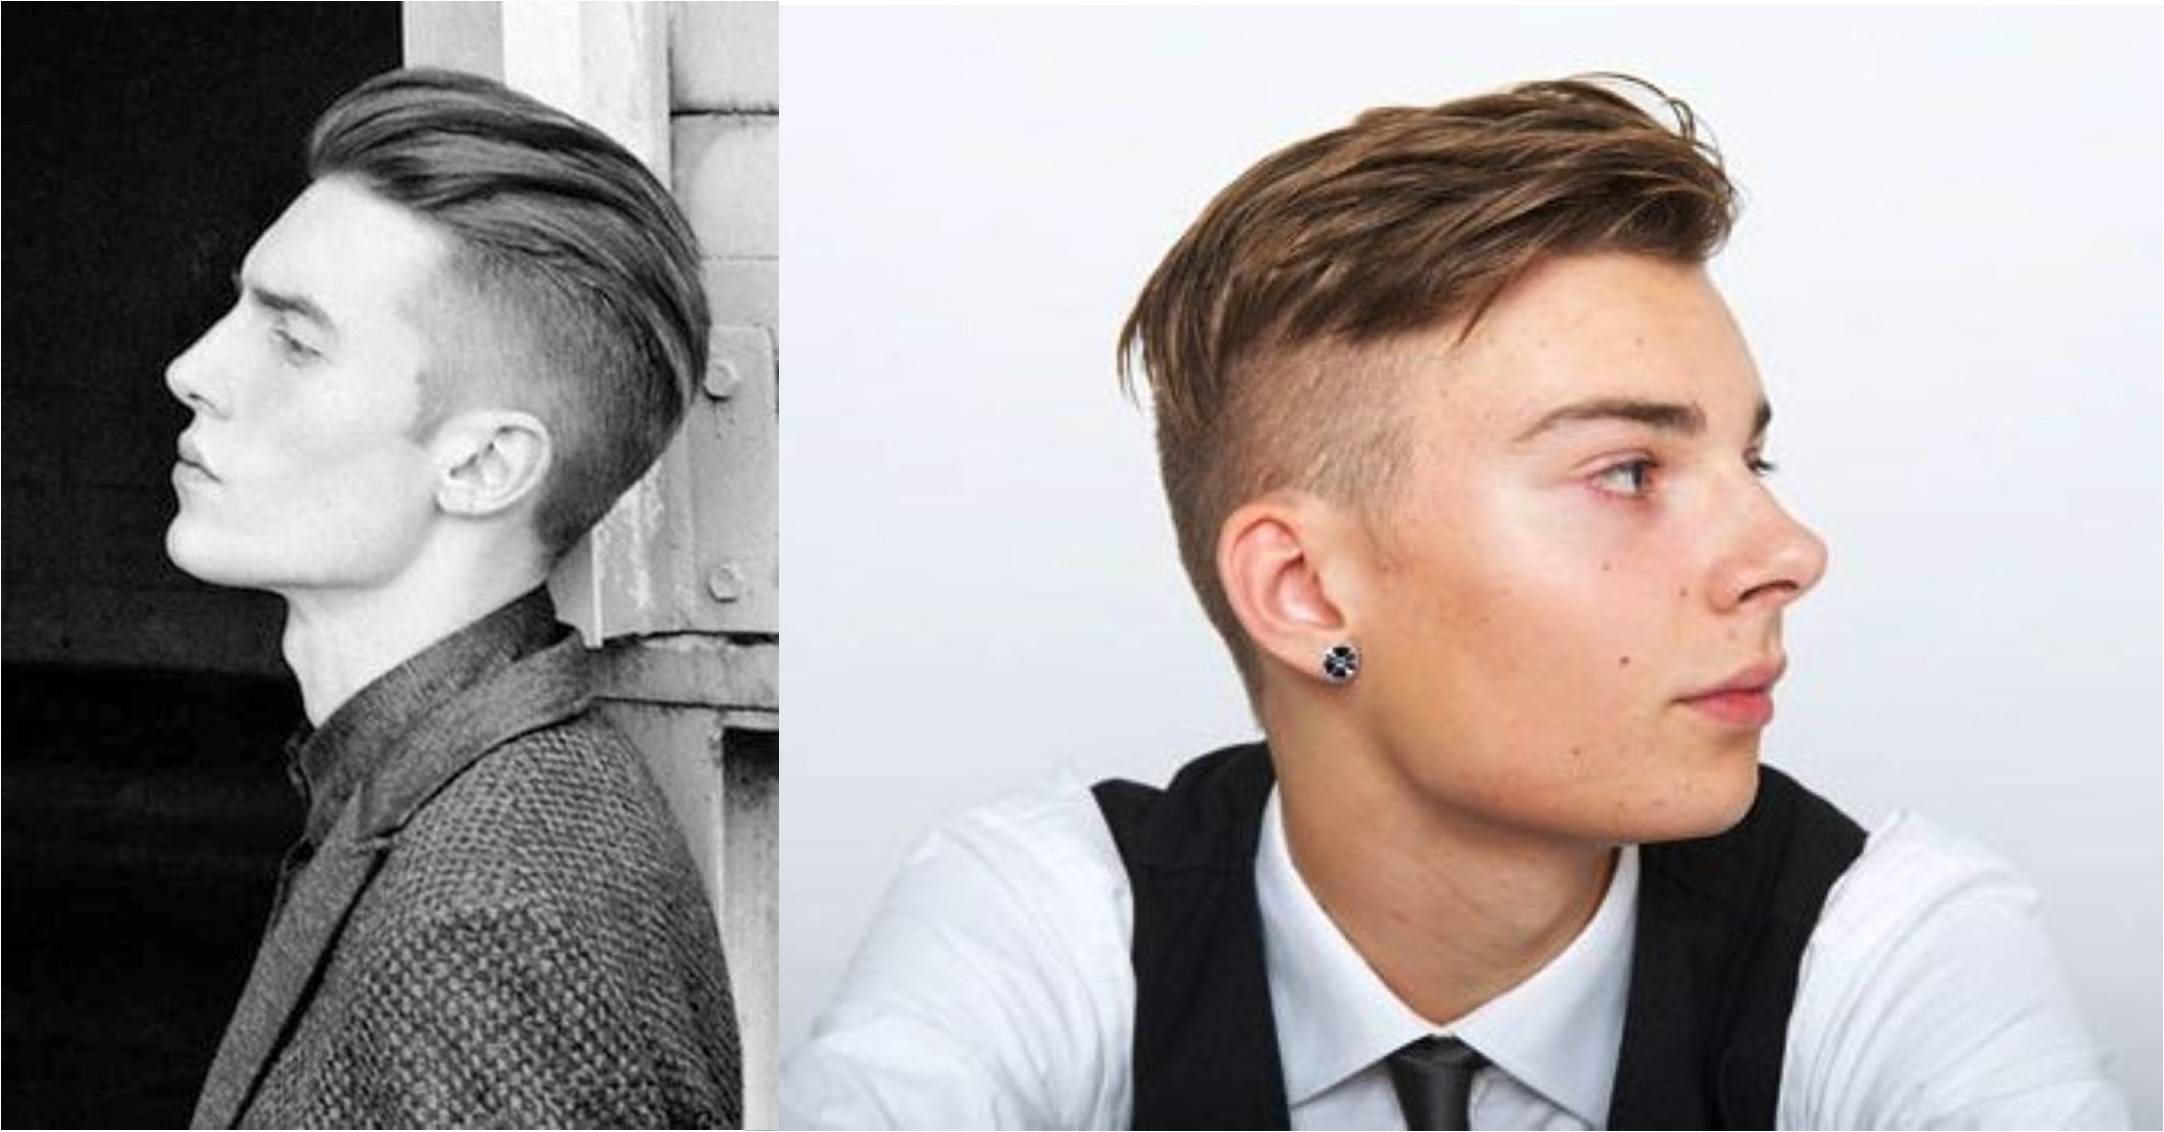 New Era Of Modern Haircuts For Men